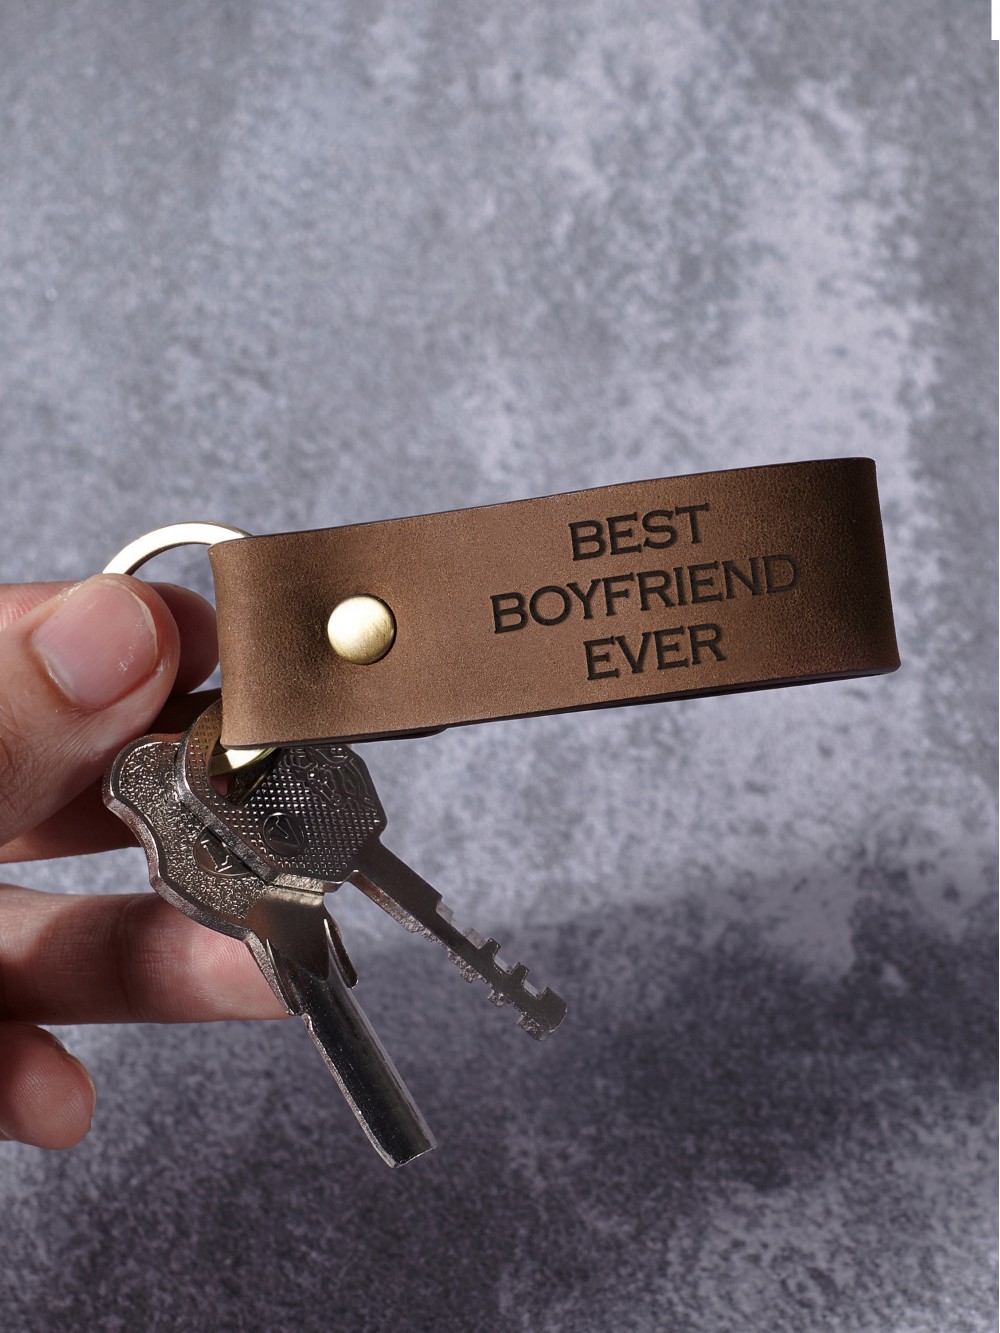 "Best Boyfriend Ever" Personalized Keychain for Boyfriend